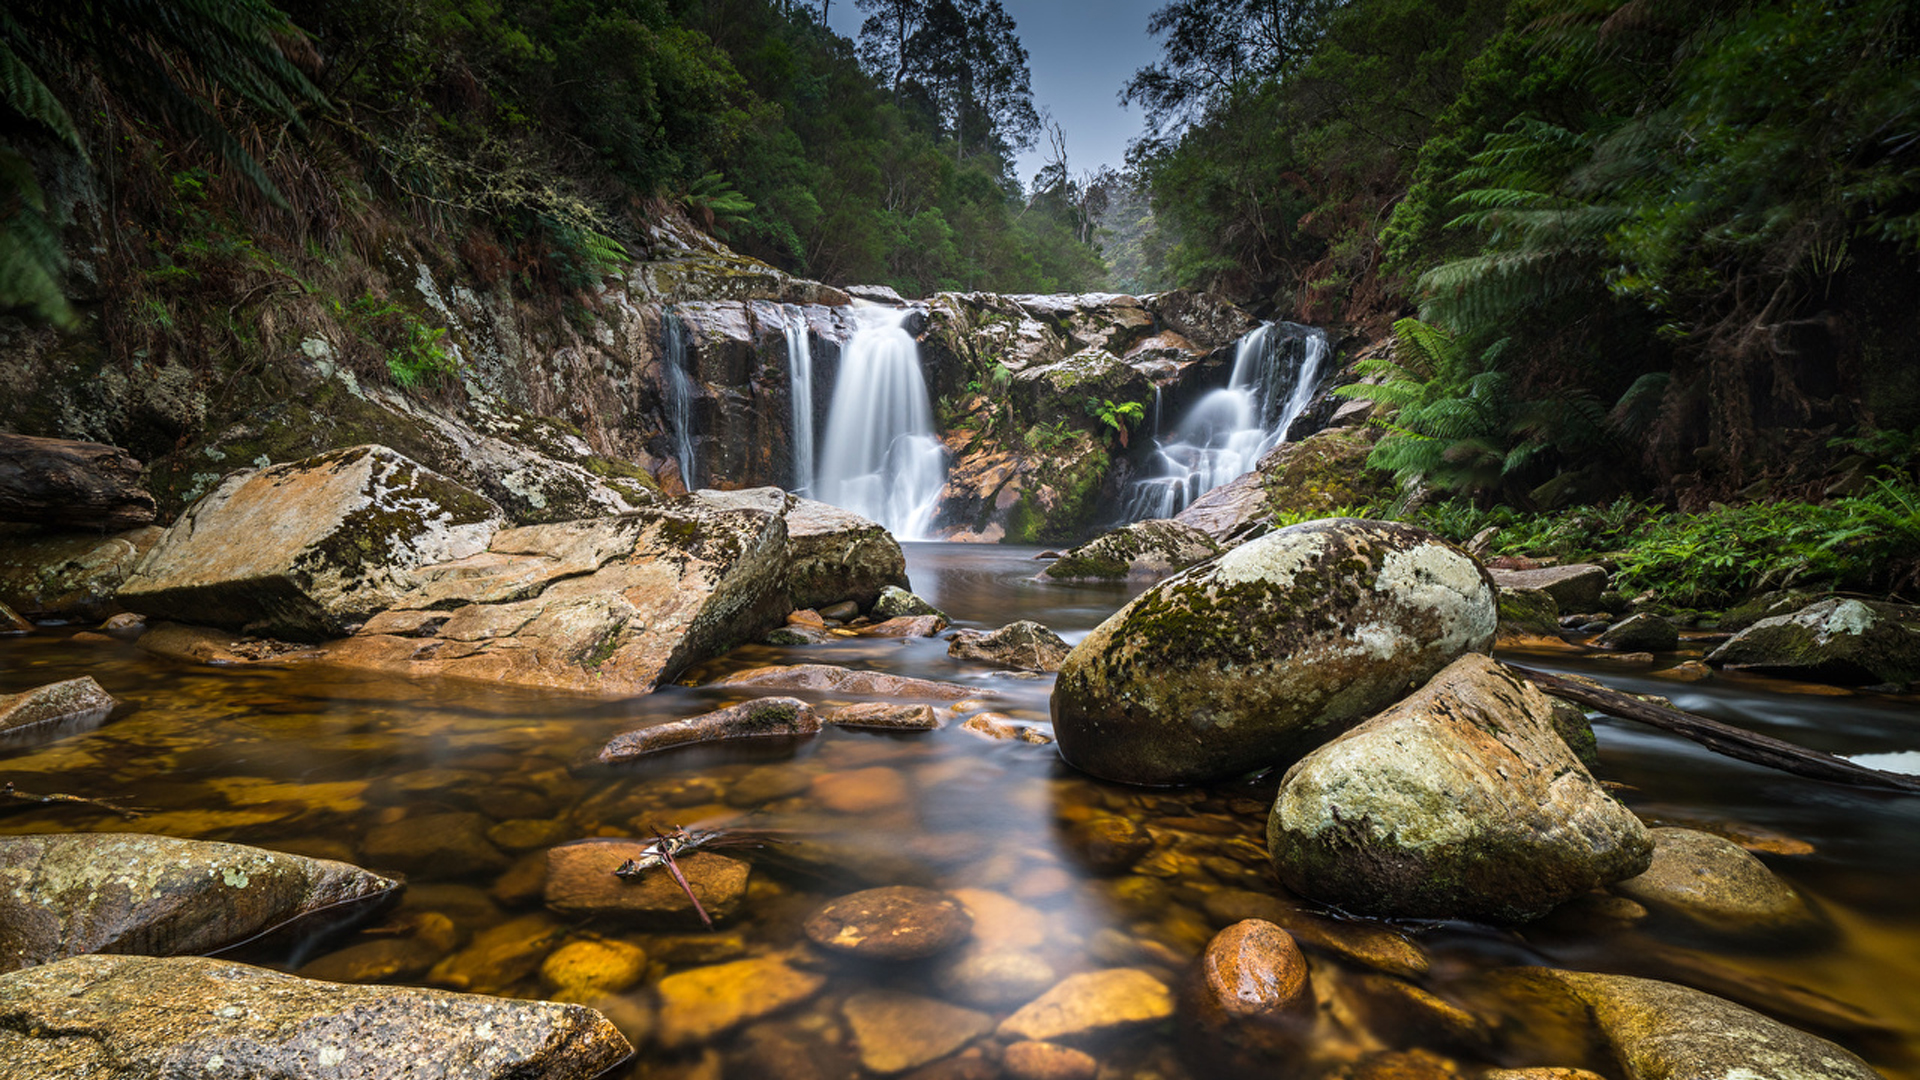 Beautiful Nature Wallpaper Waterfalls Stream From Rock Between Green Trees Forest Wallpaper HD Nature